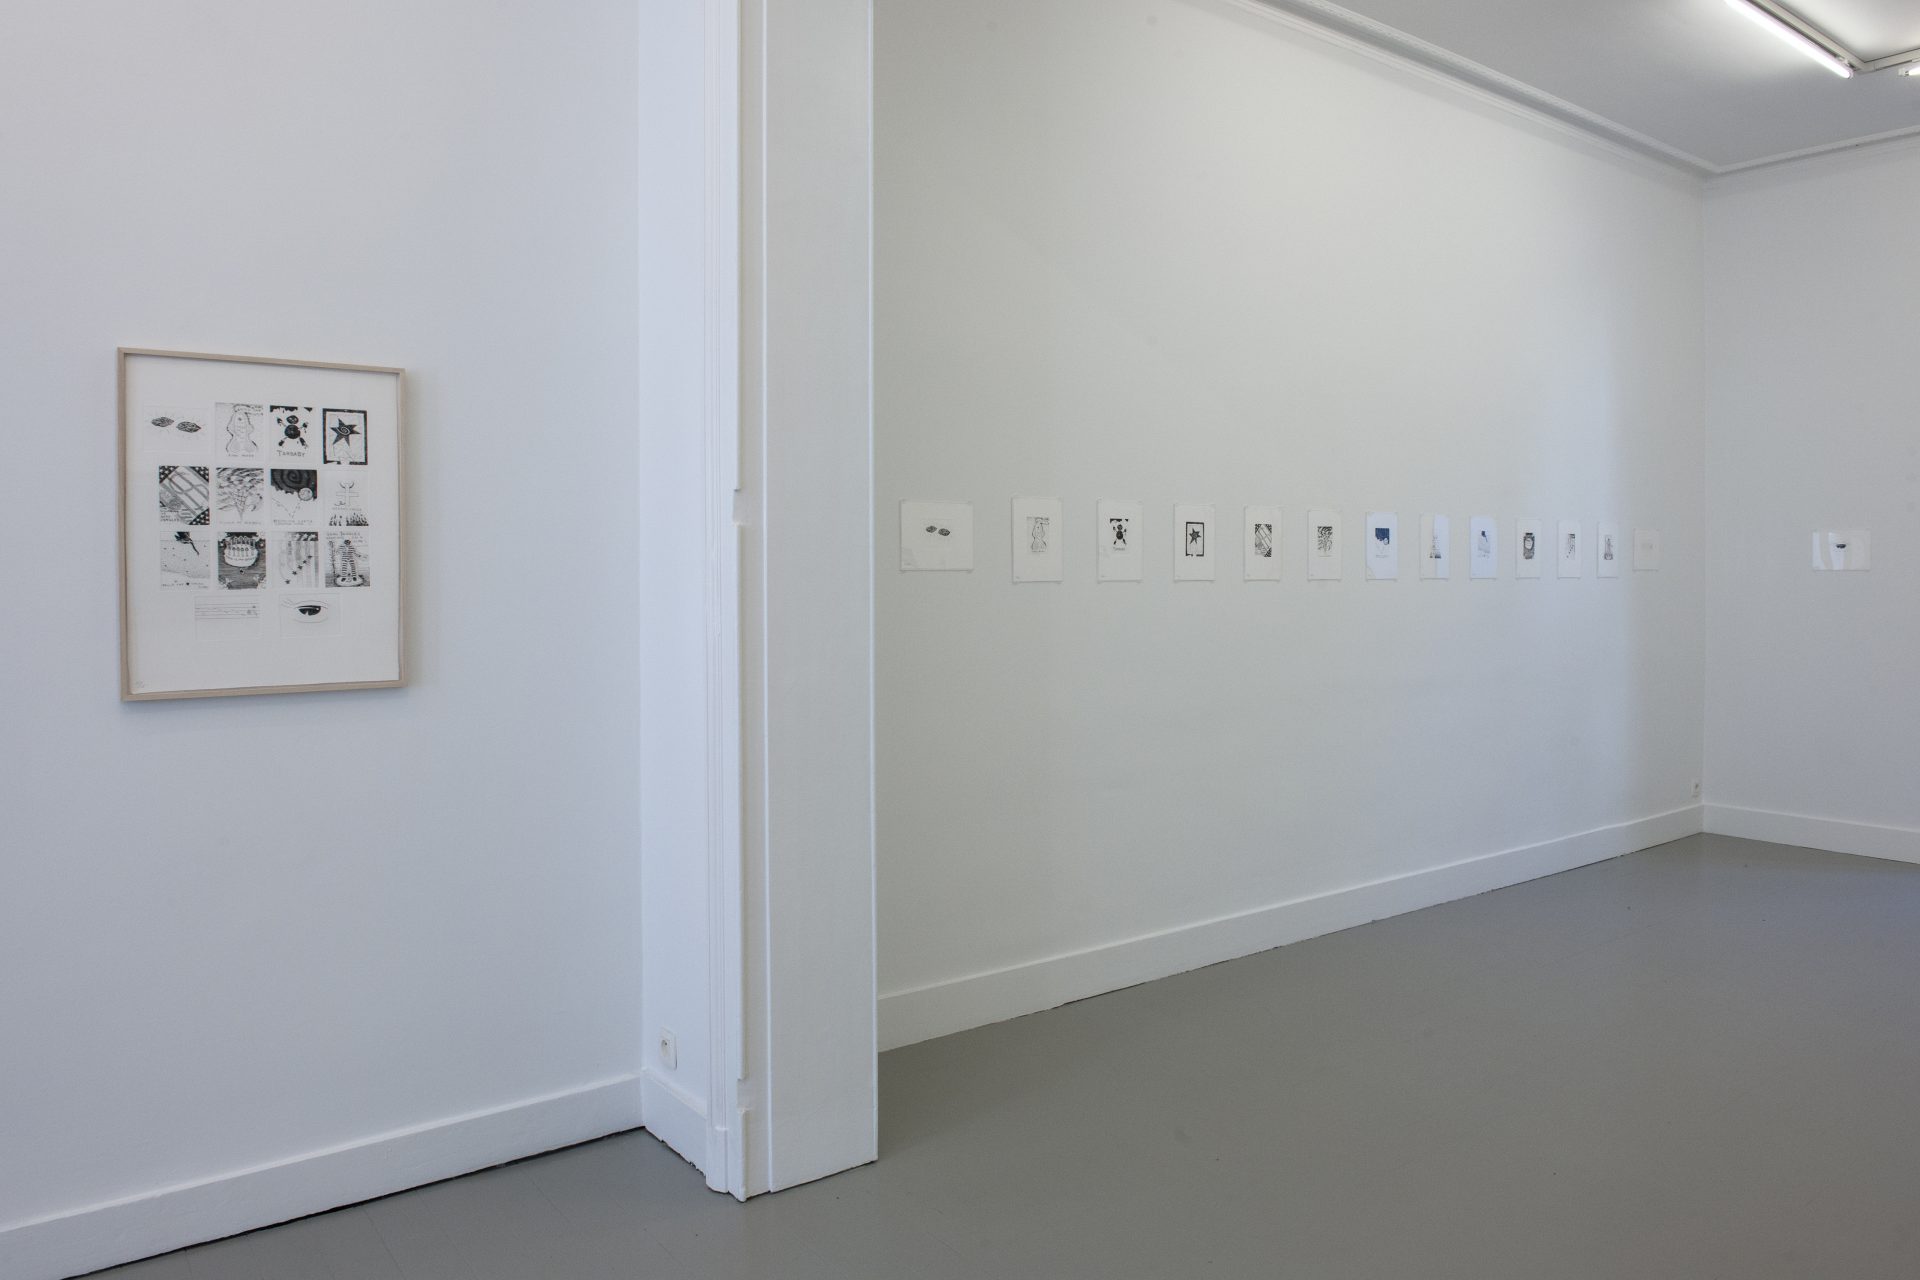 Paul Thek, installation view at Jan Mot, 2019